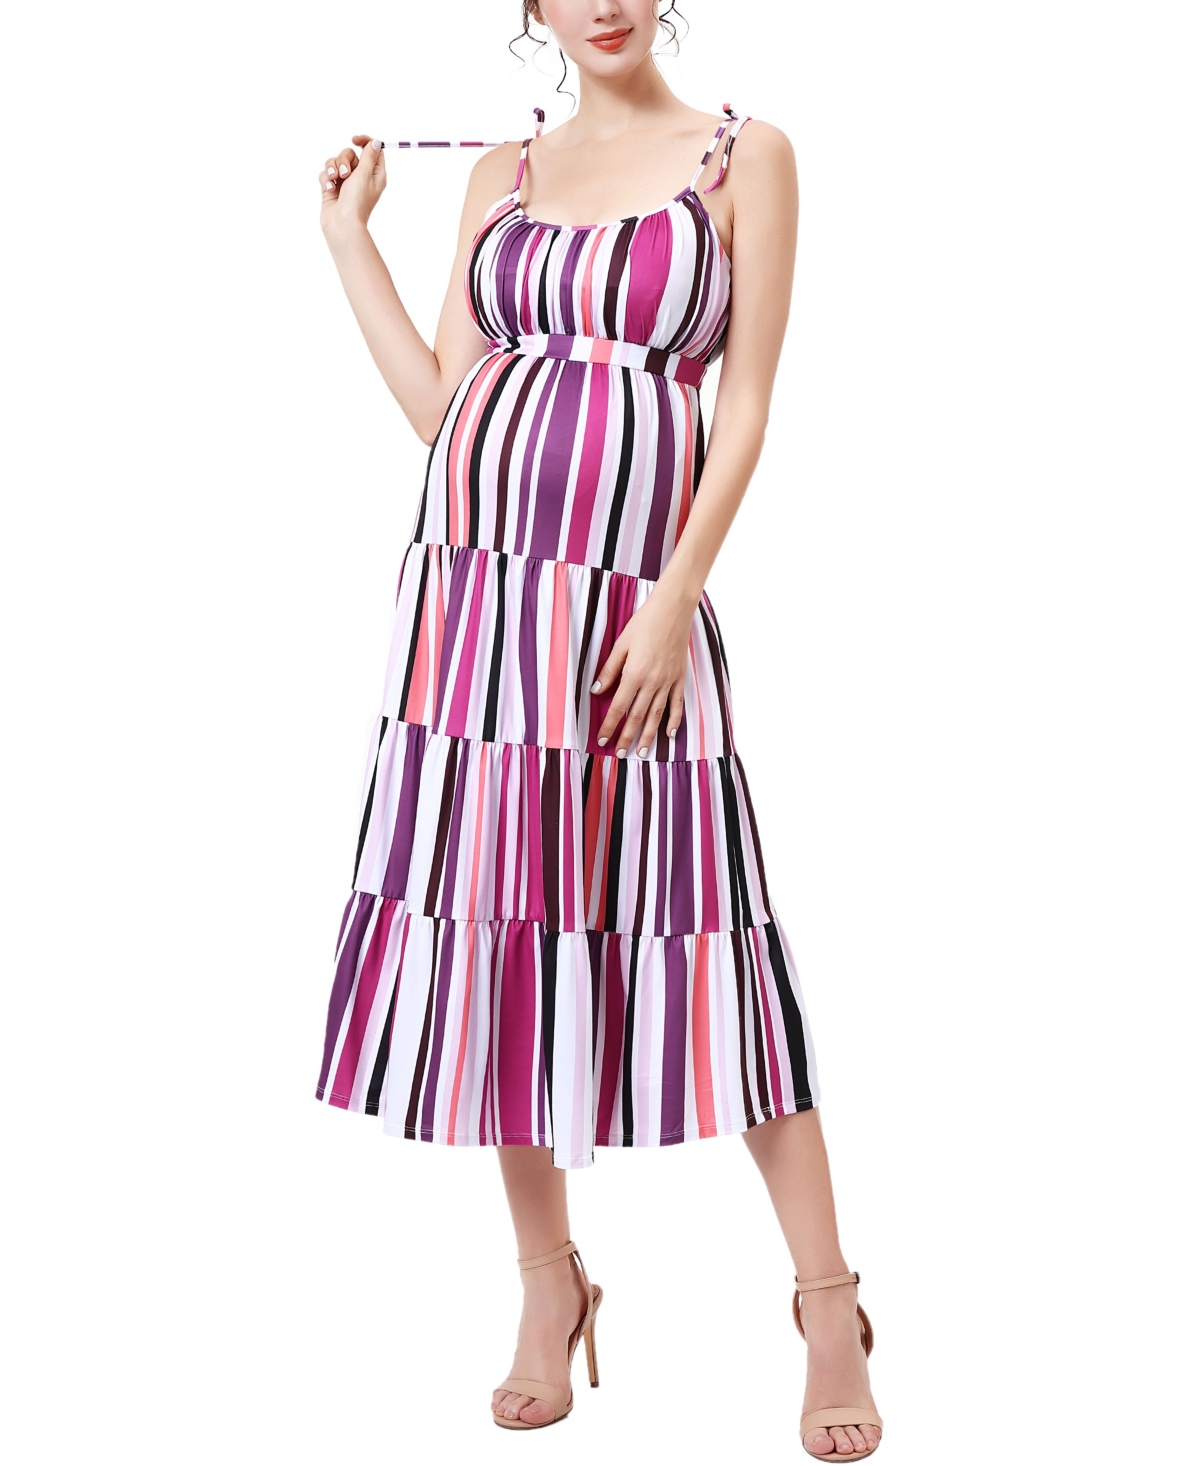 kimi + kai Maternity Fit and Flare Ruffle Dress - Multicolored